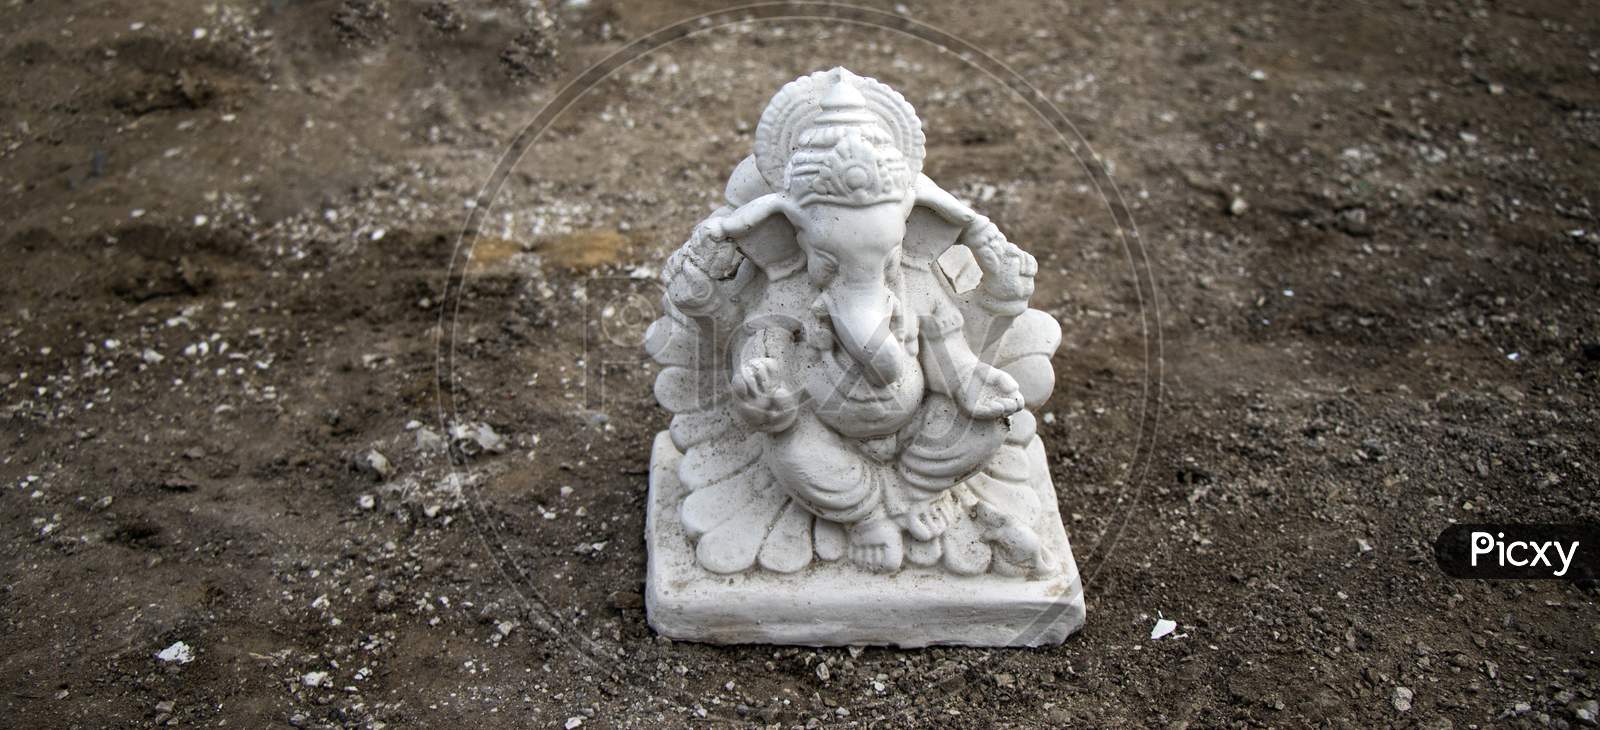 Lord Ganesha Statue